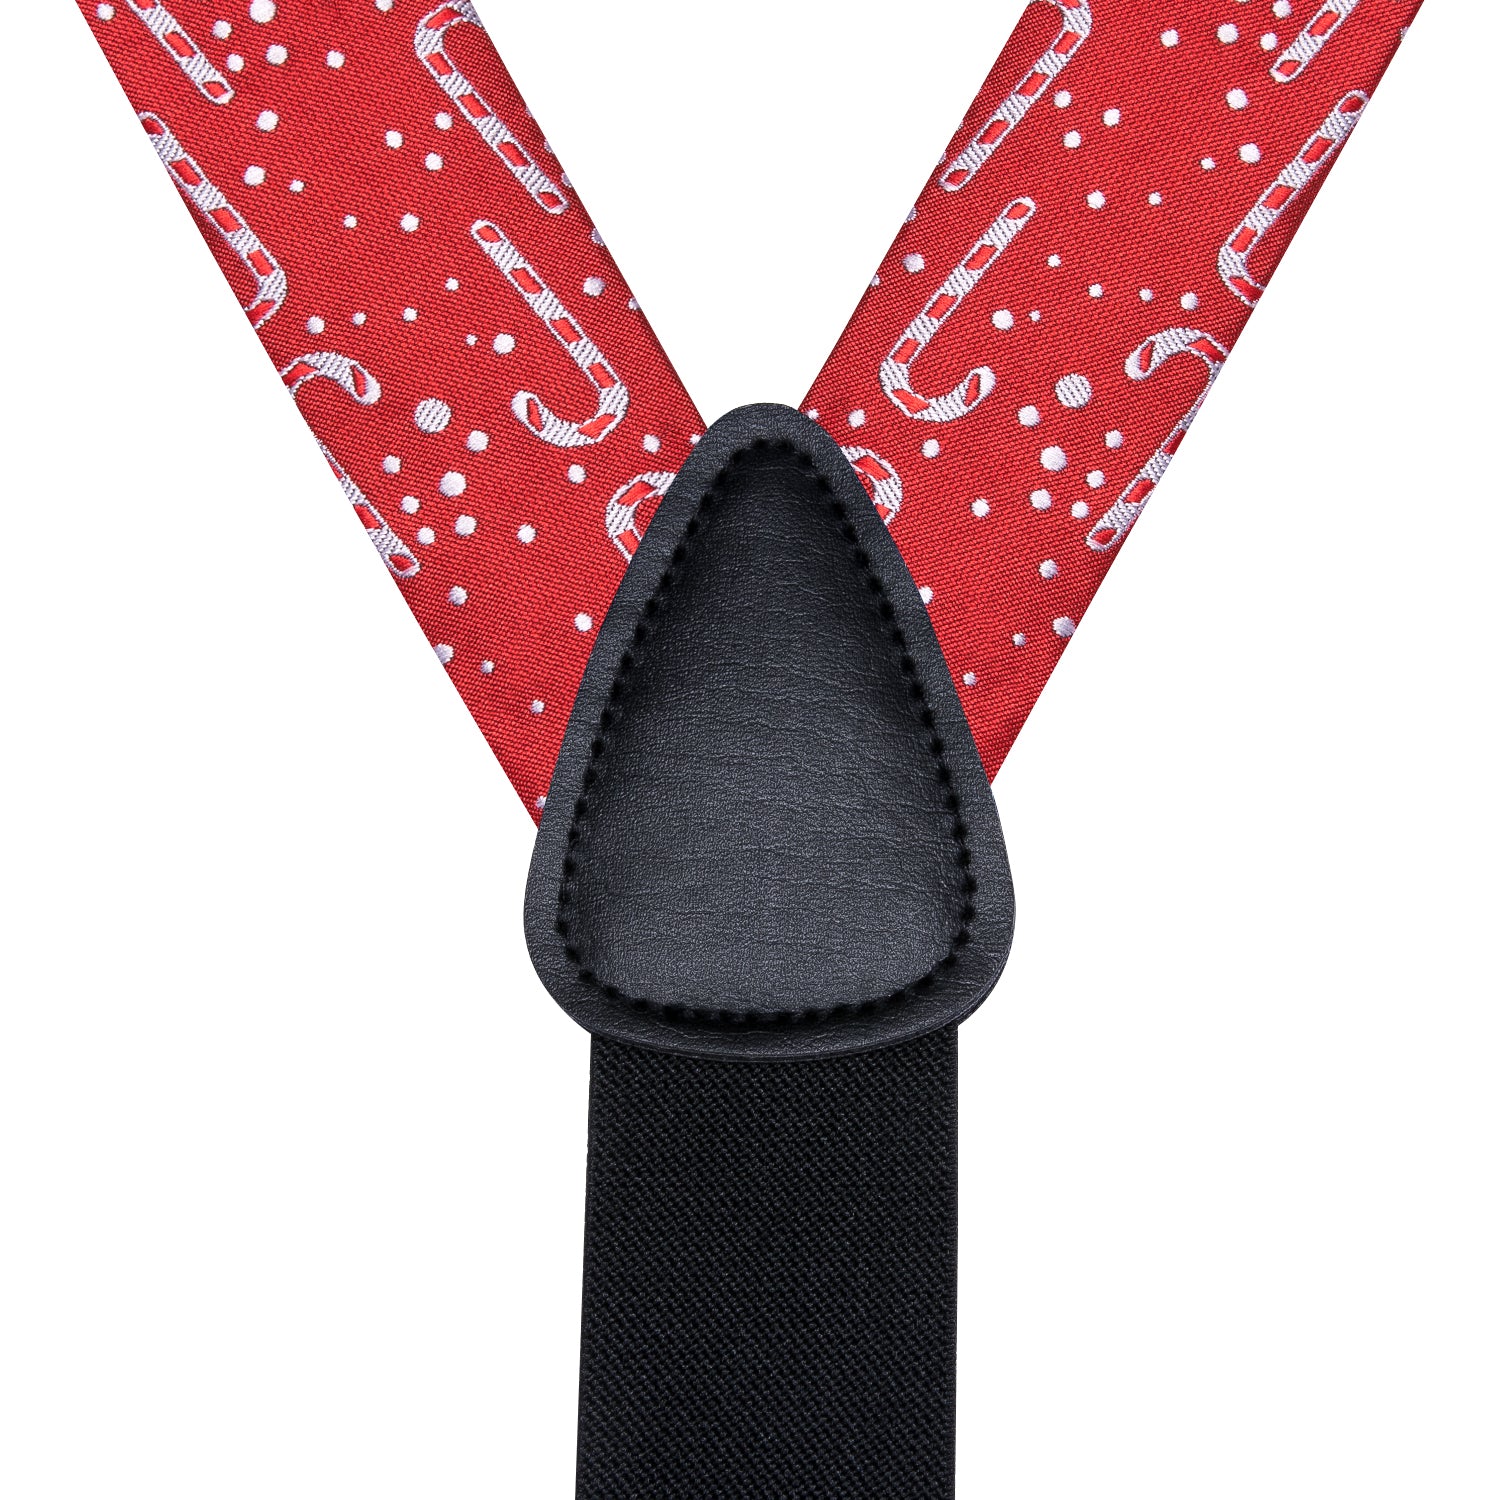 Red Christmas Candy Cane Suspender Bowtie Hanky Cufflinks Set